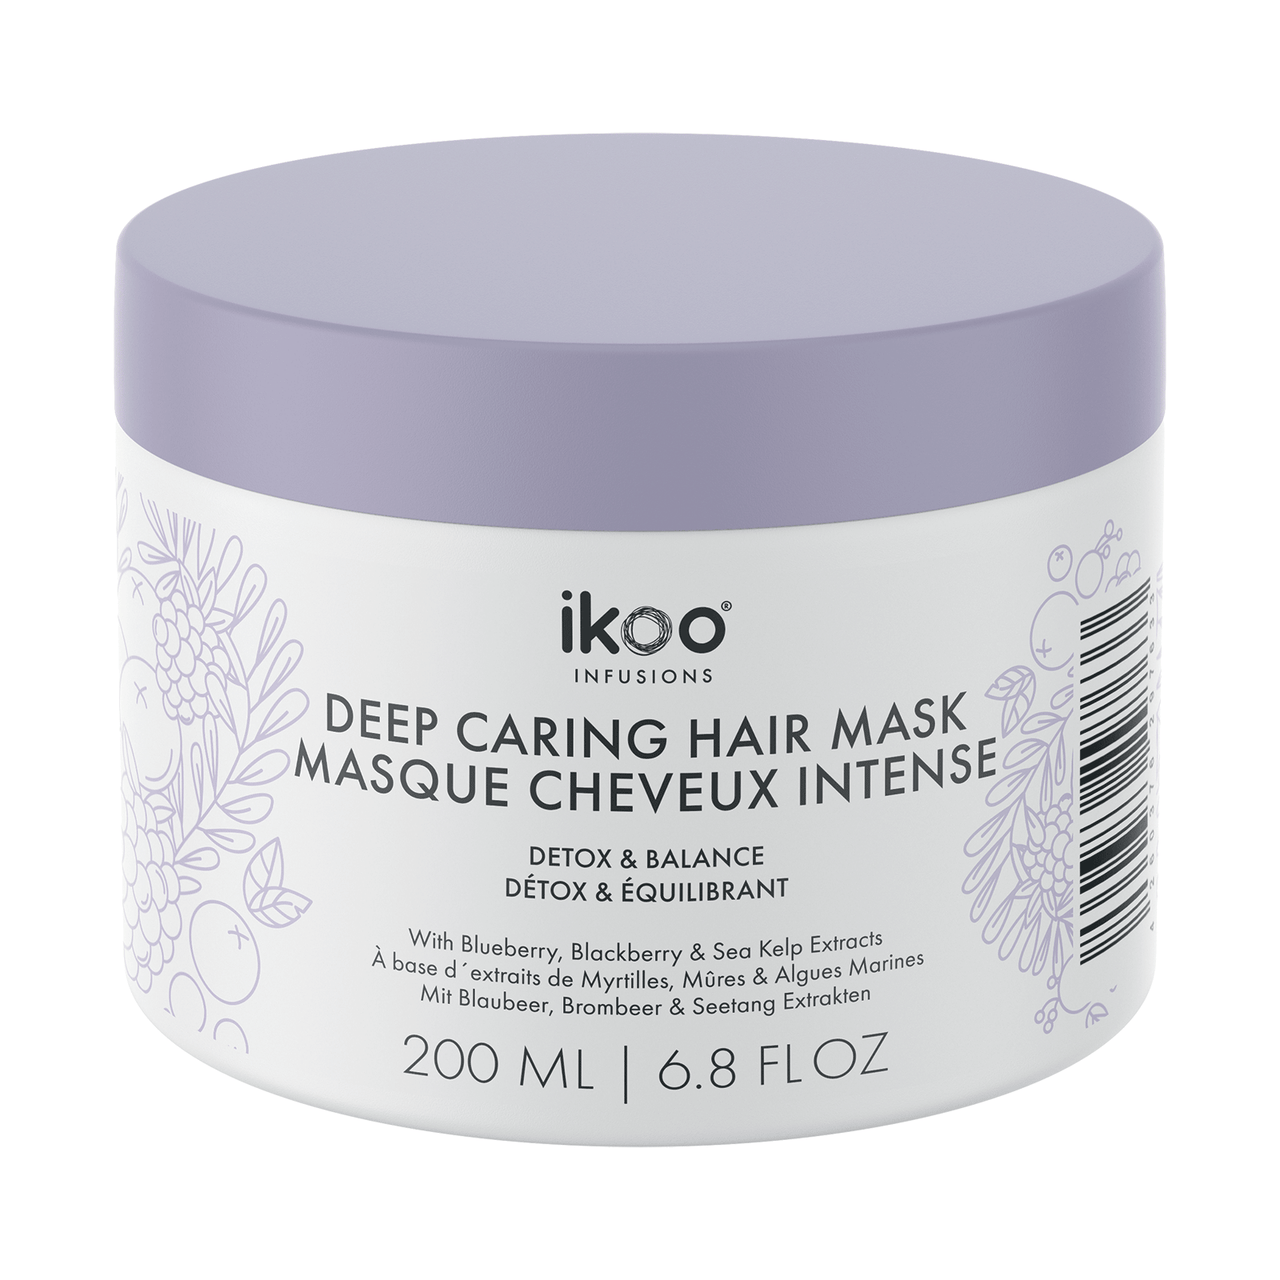 ikoo Deep Caring Hair Mask Detox & Balance 6.8 fl. oz.